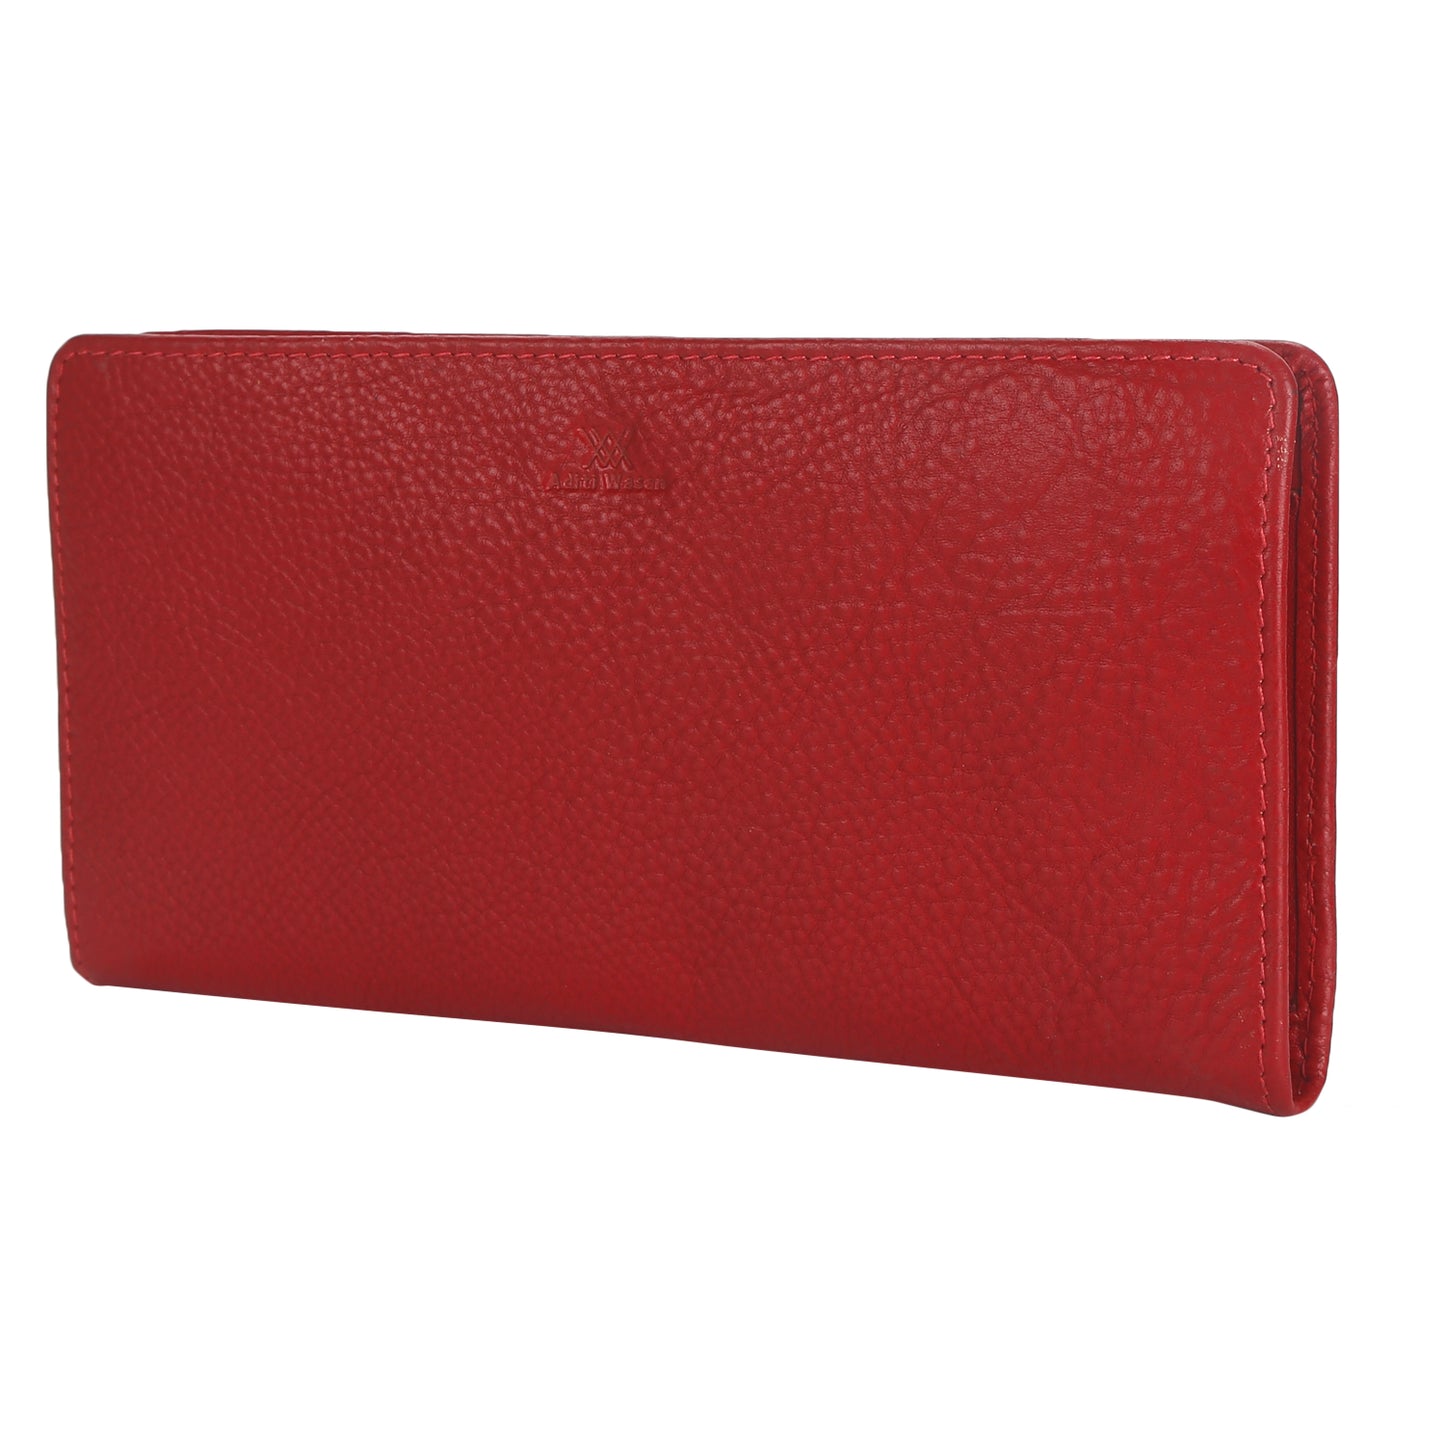 Aditi Wasan Women Casual Maroon Genuine Leather Wallet